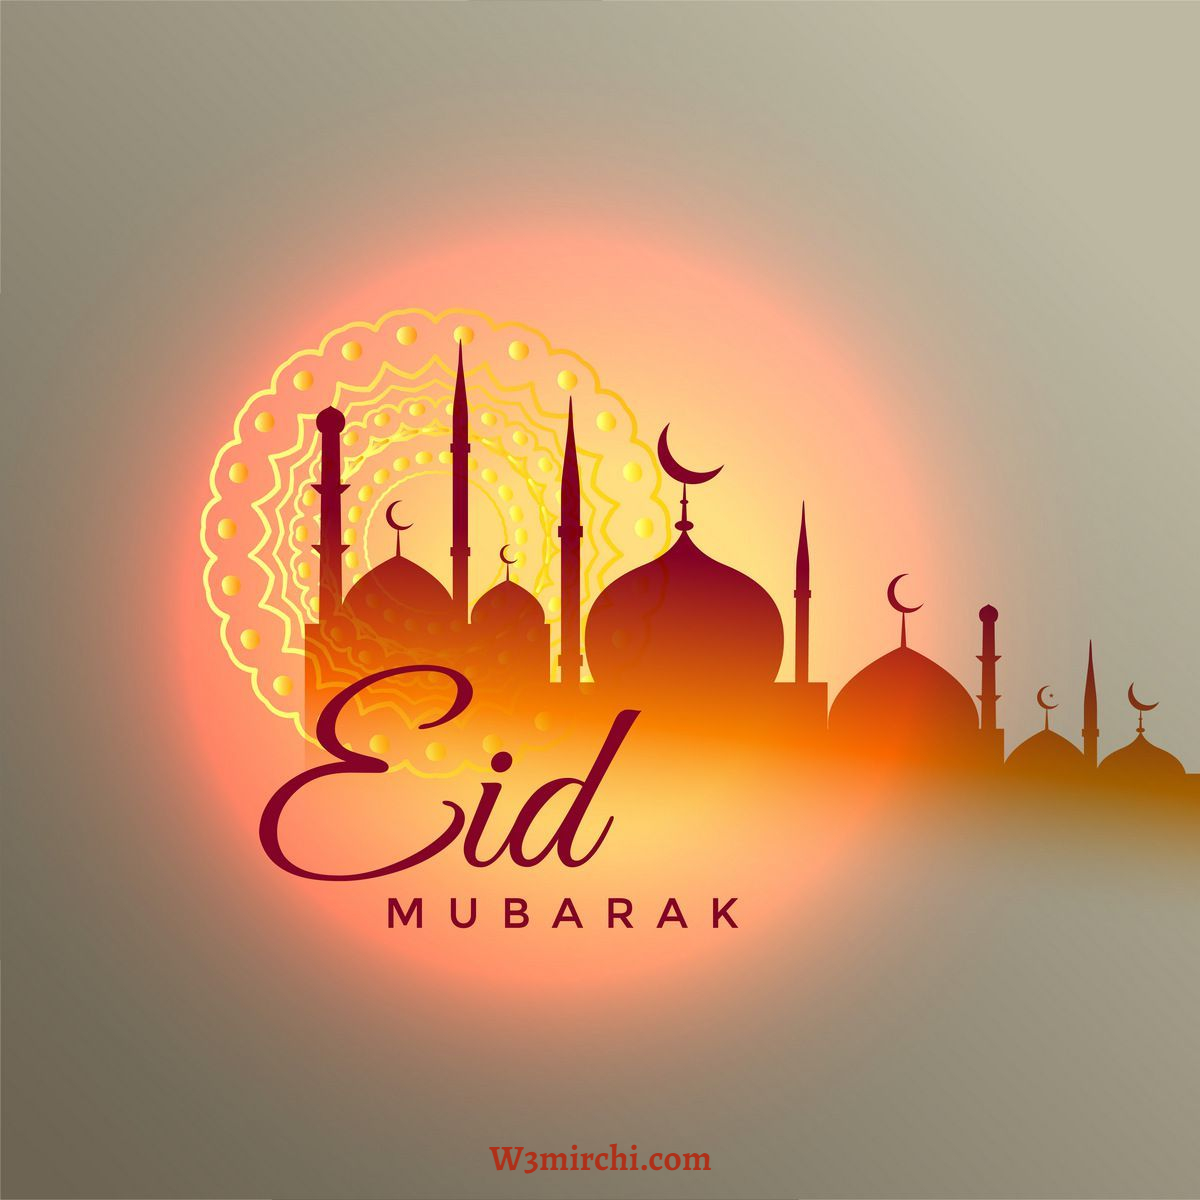 Happy Eid Mubarak, dear! Eid Mubarak Images